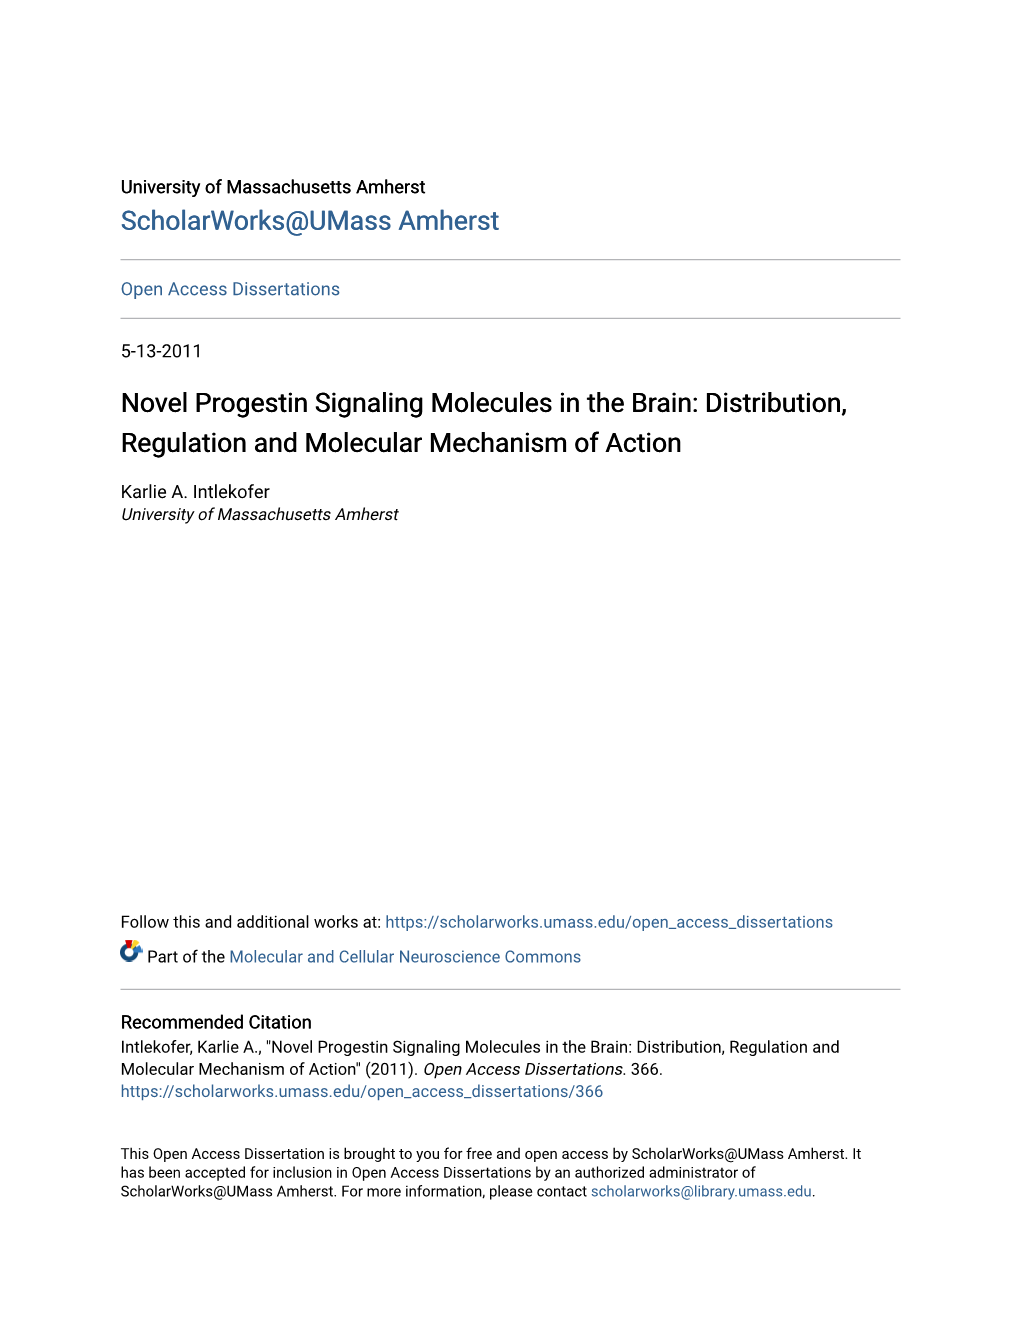 Novel Progestin Signaling Molecules in the Brain: Distribution, Regulation and Molecular Mechanism of Action